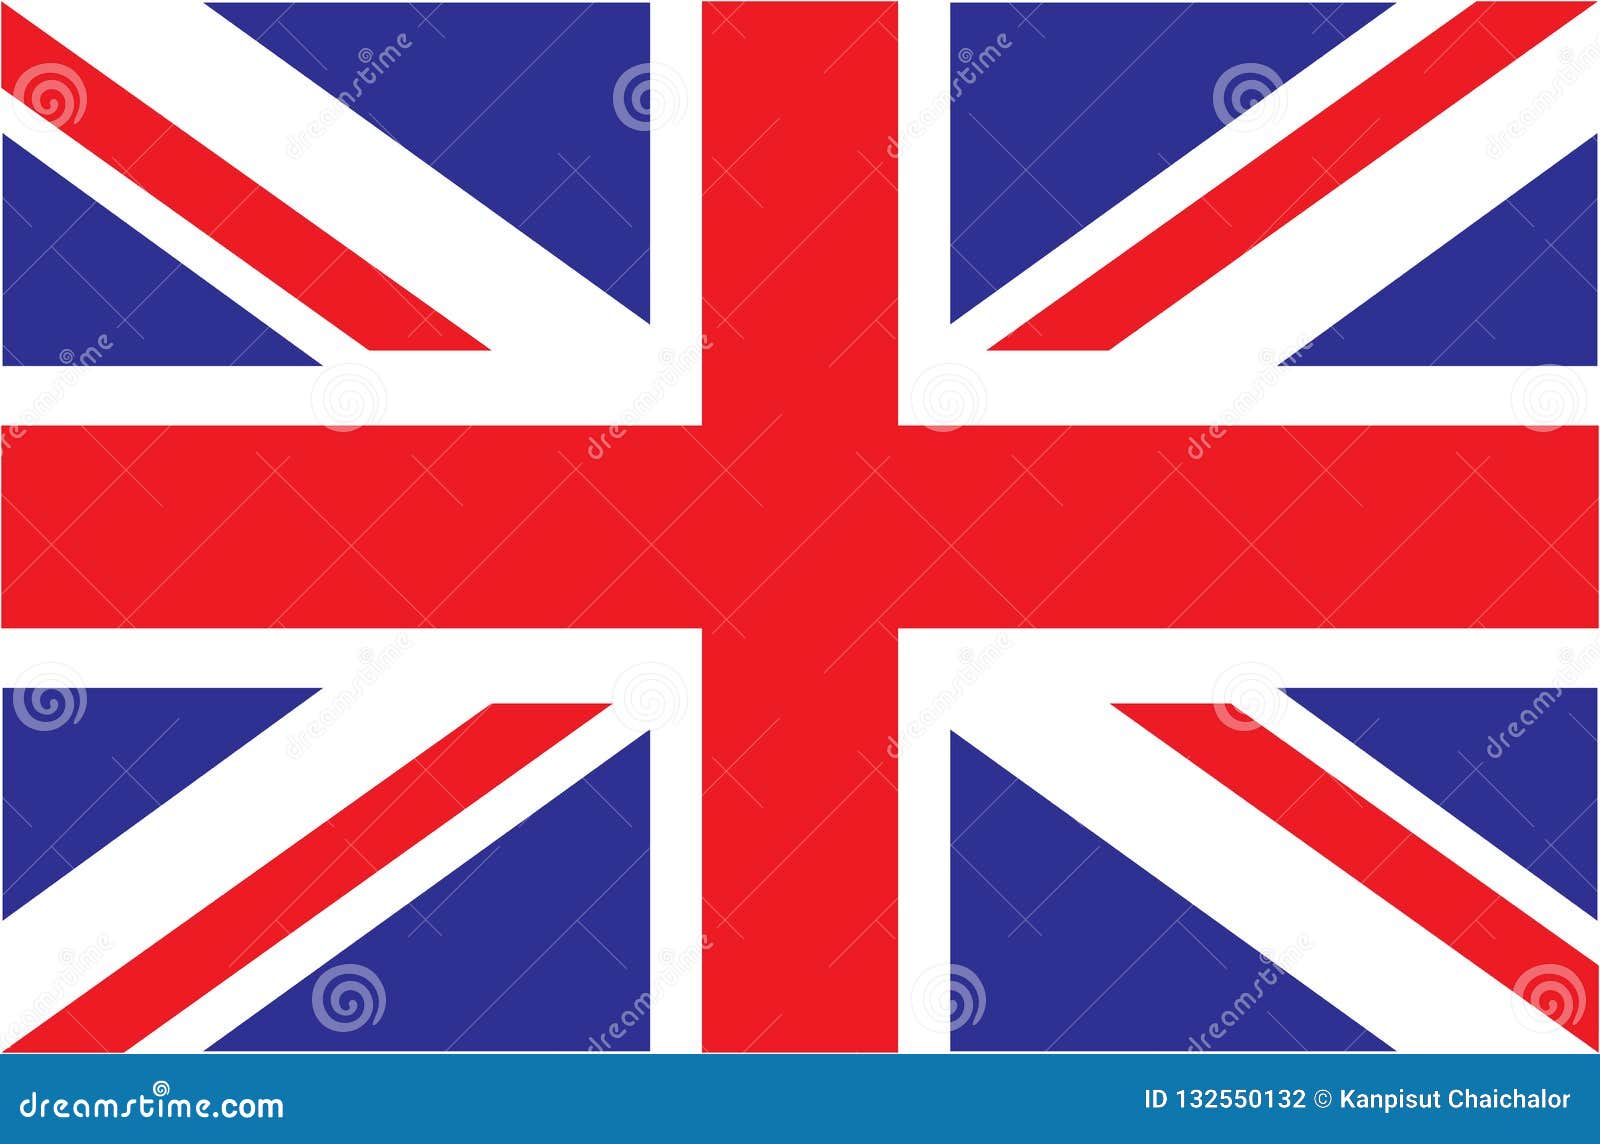 uk. union jack. flag of united kingdom. official colors. correct proportion.